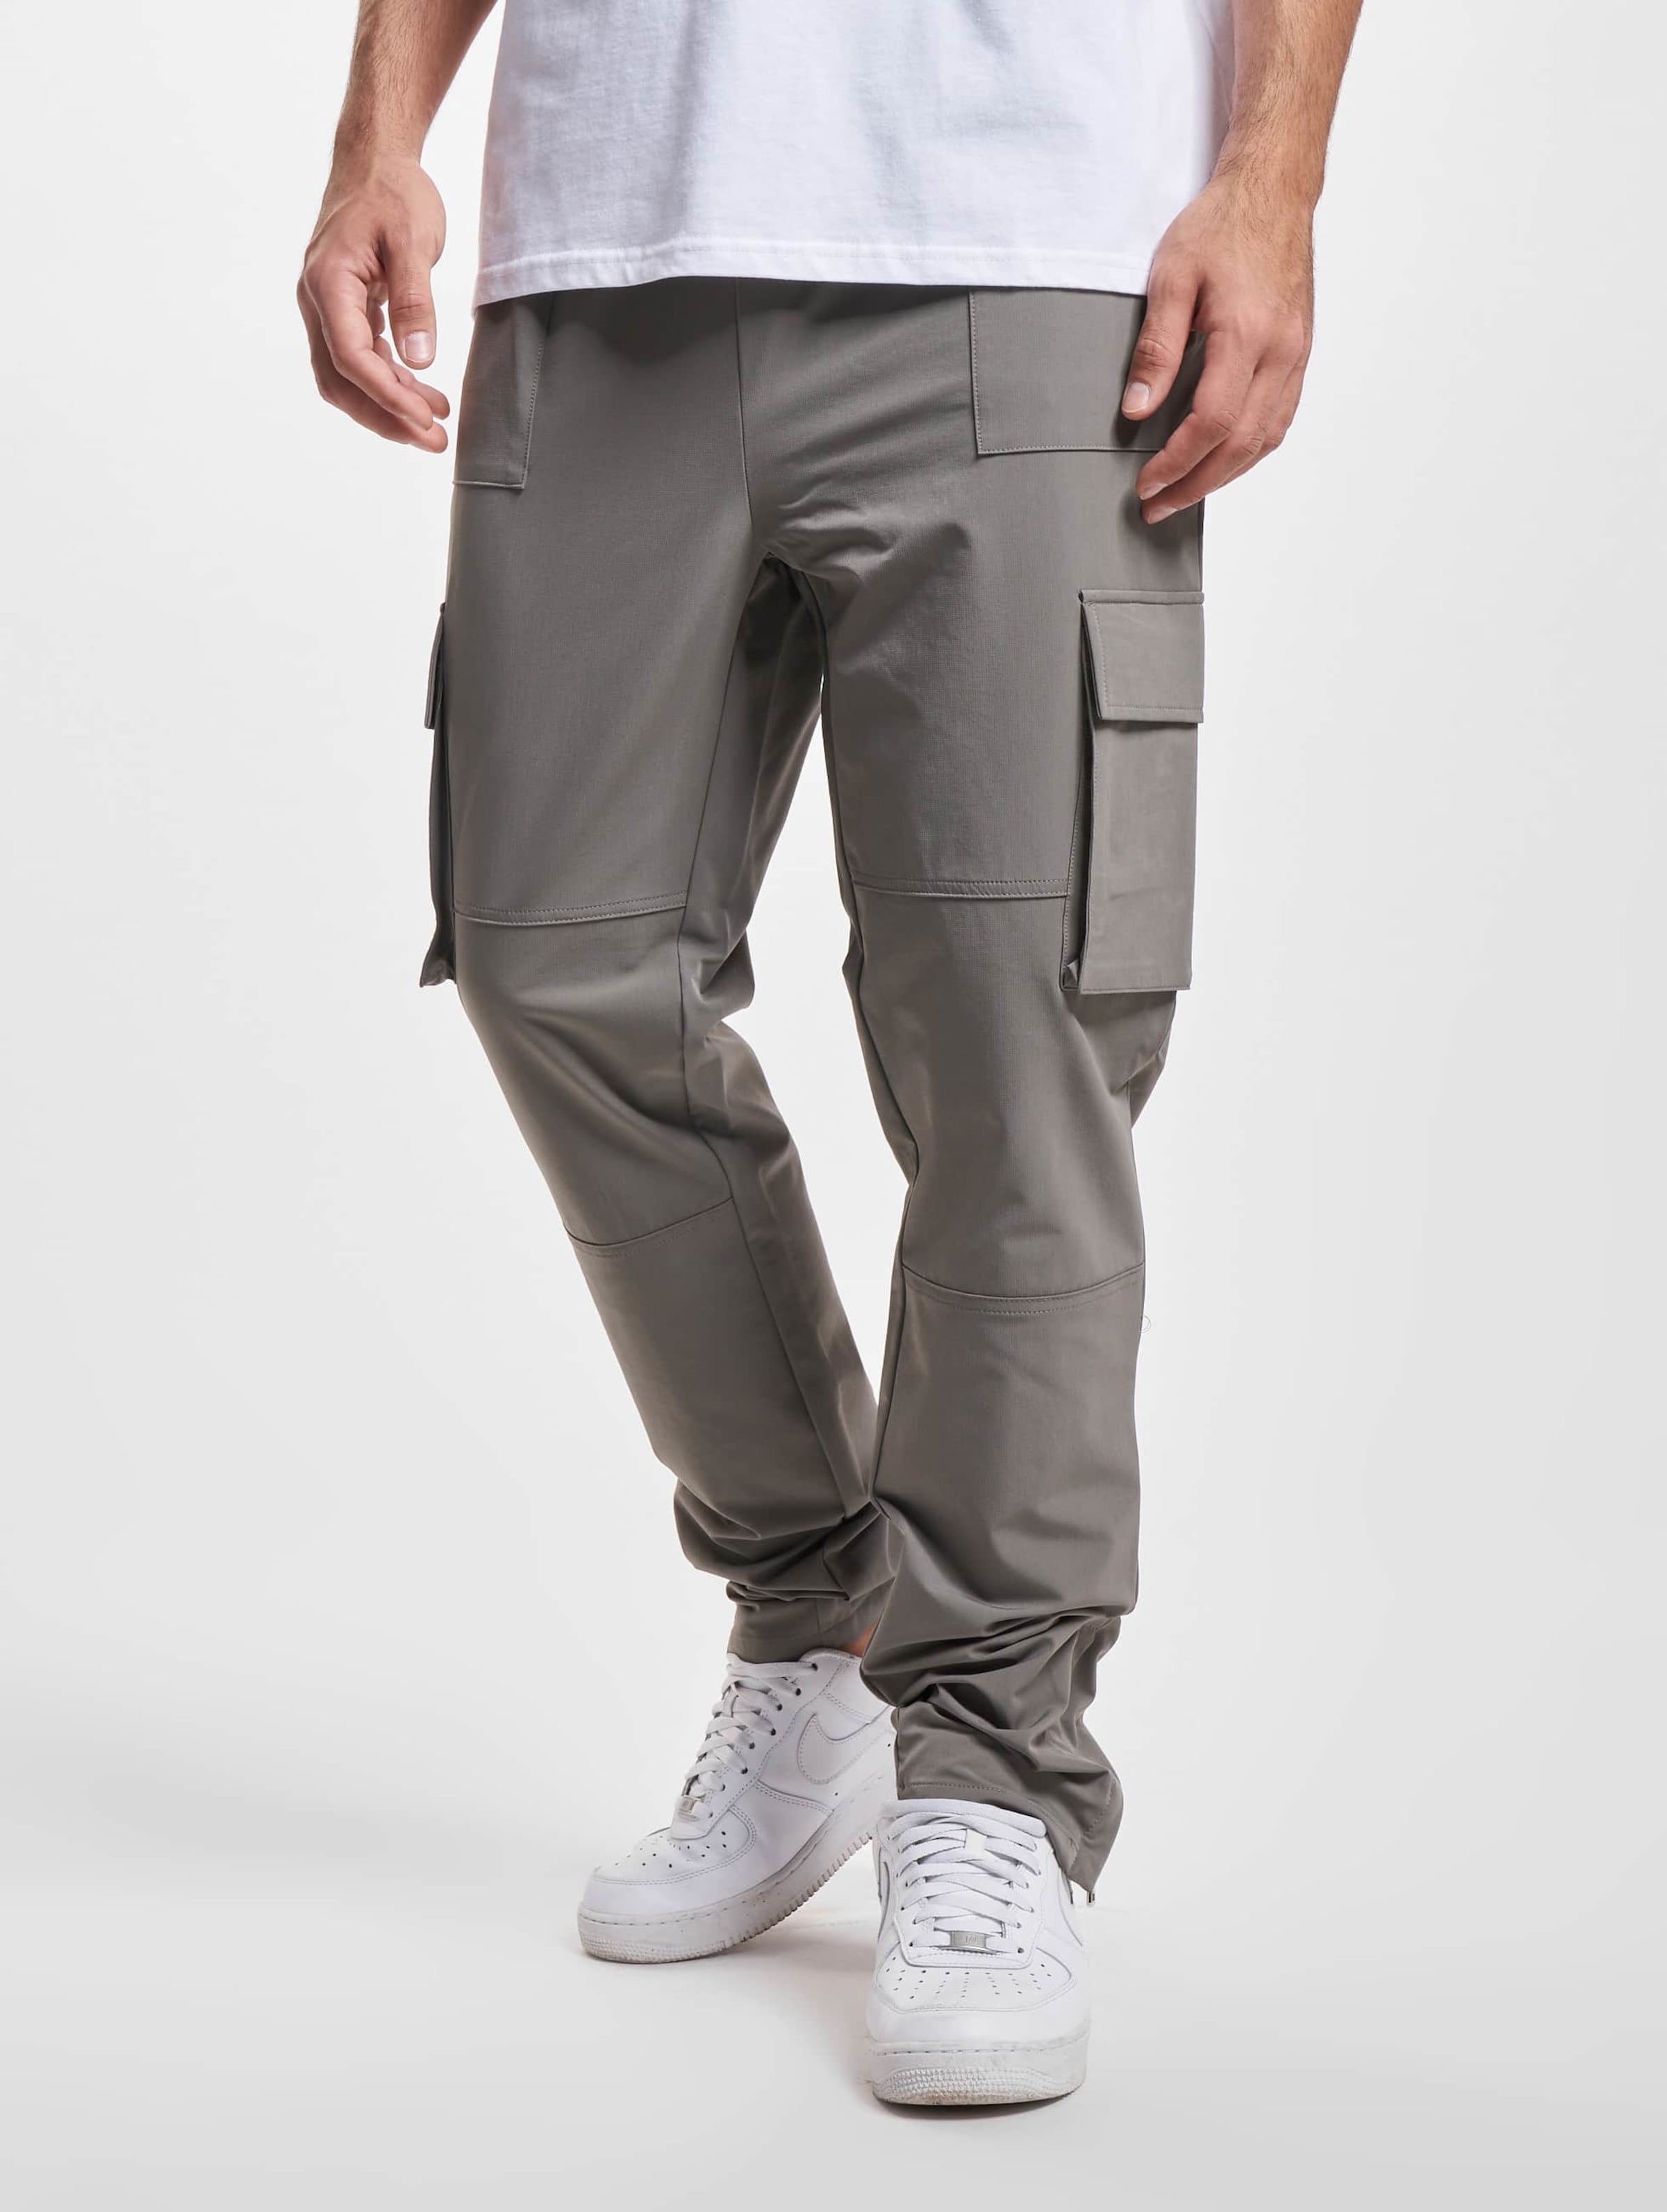 Buy BELANO Men Classy Slim Fit Beige Cotton Stretch Multi Pocket Cargo Pants  (28) at Amazon.in